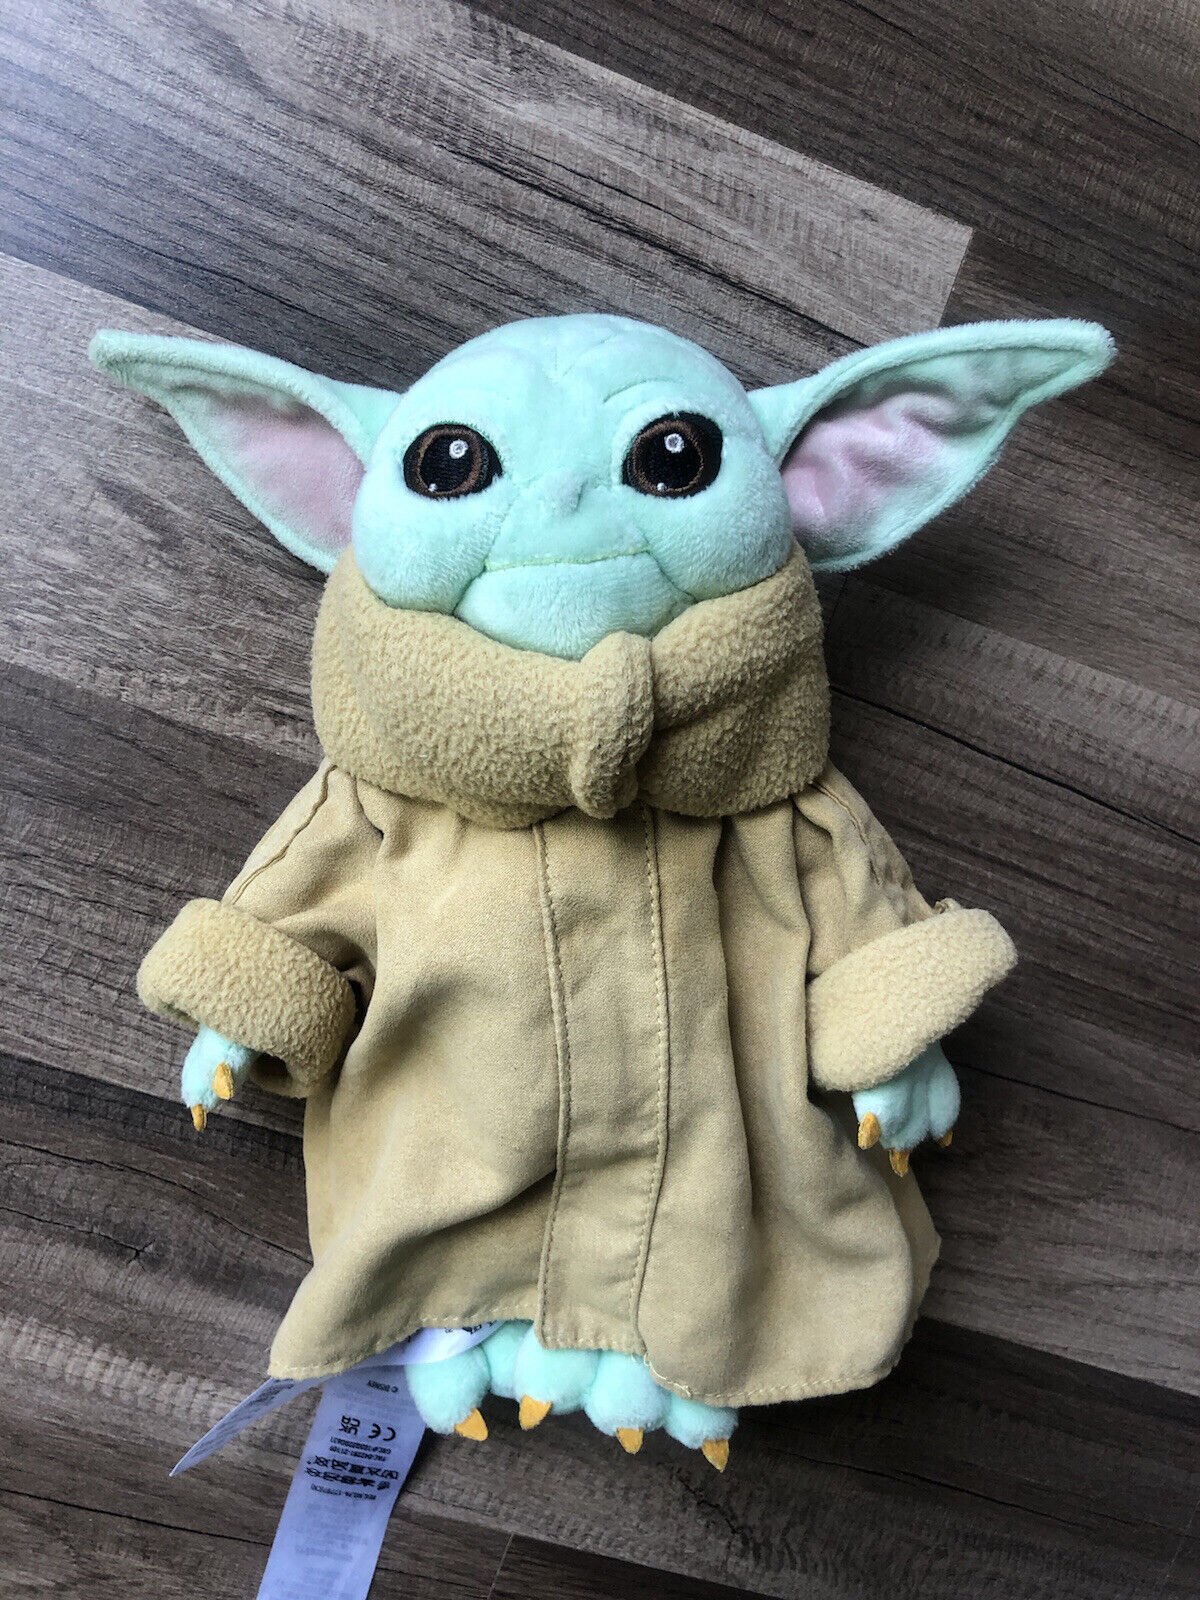 Disney Store Star Wars Yoda Stuffed Toy 10” EUC - $17.75